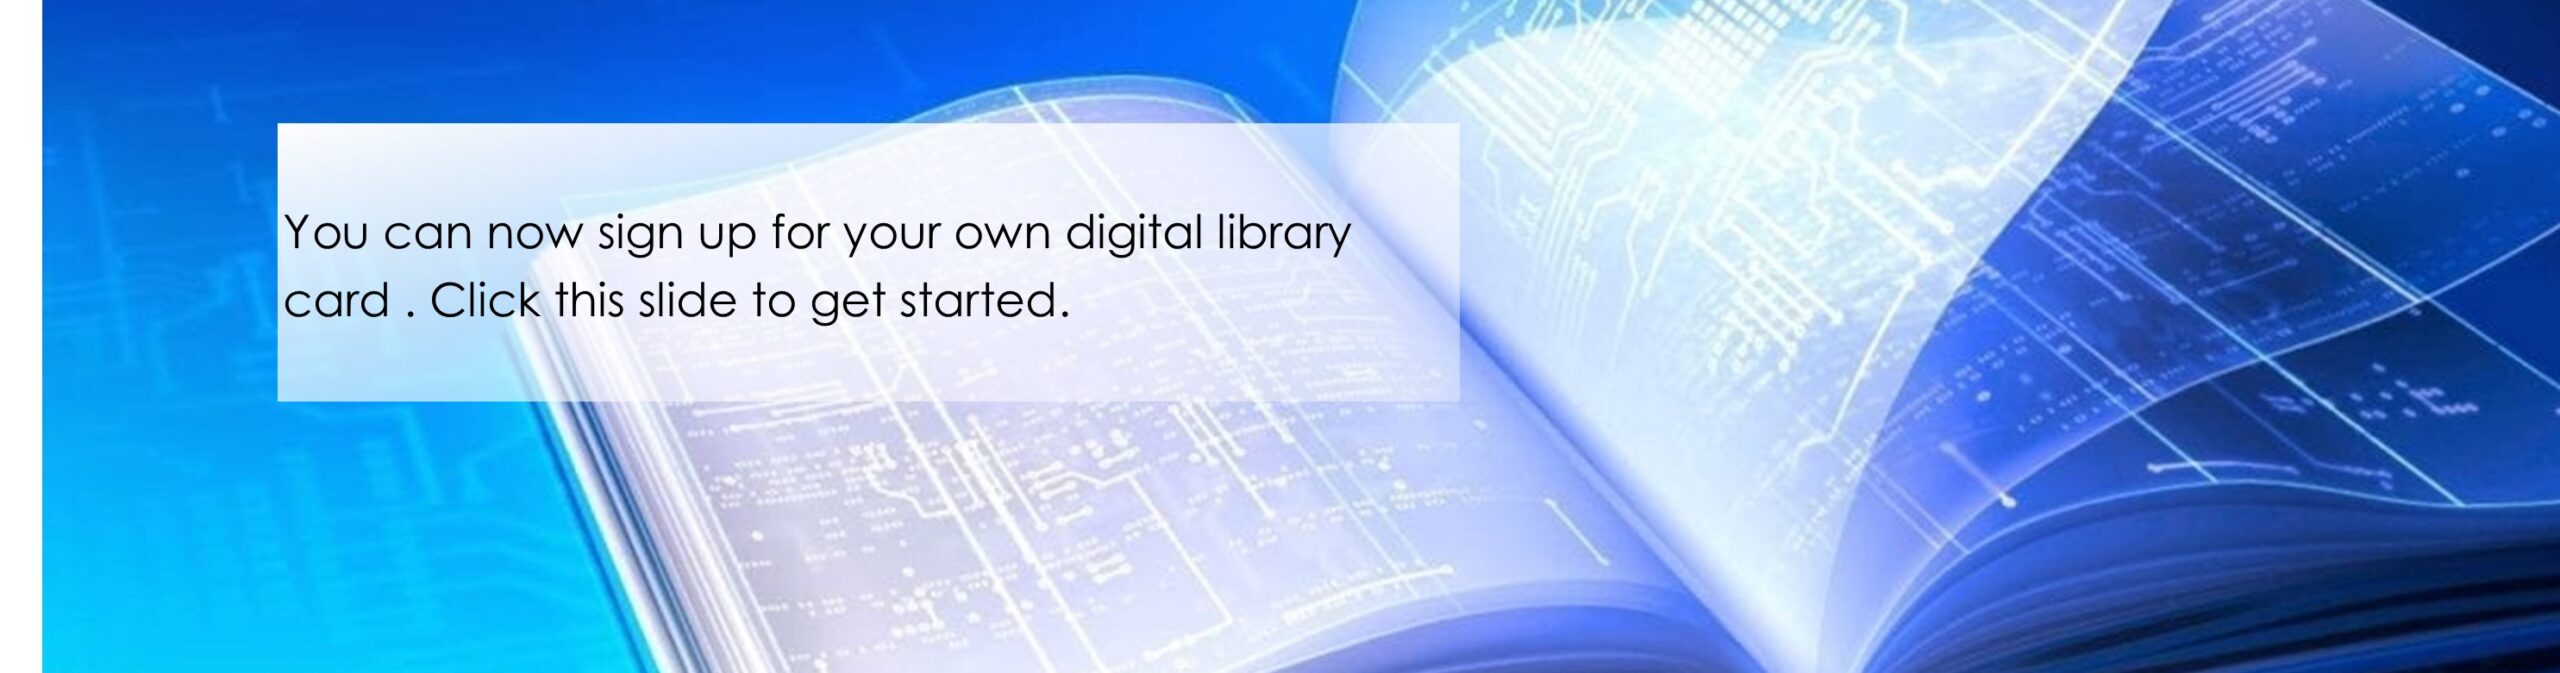 digital library card